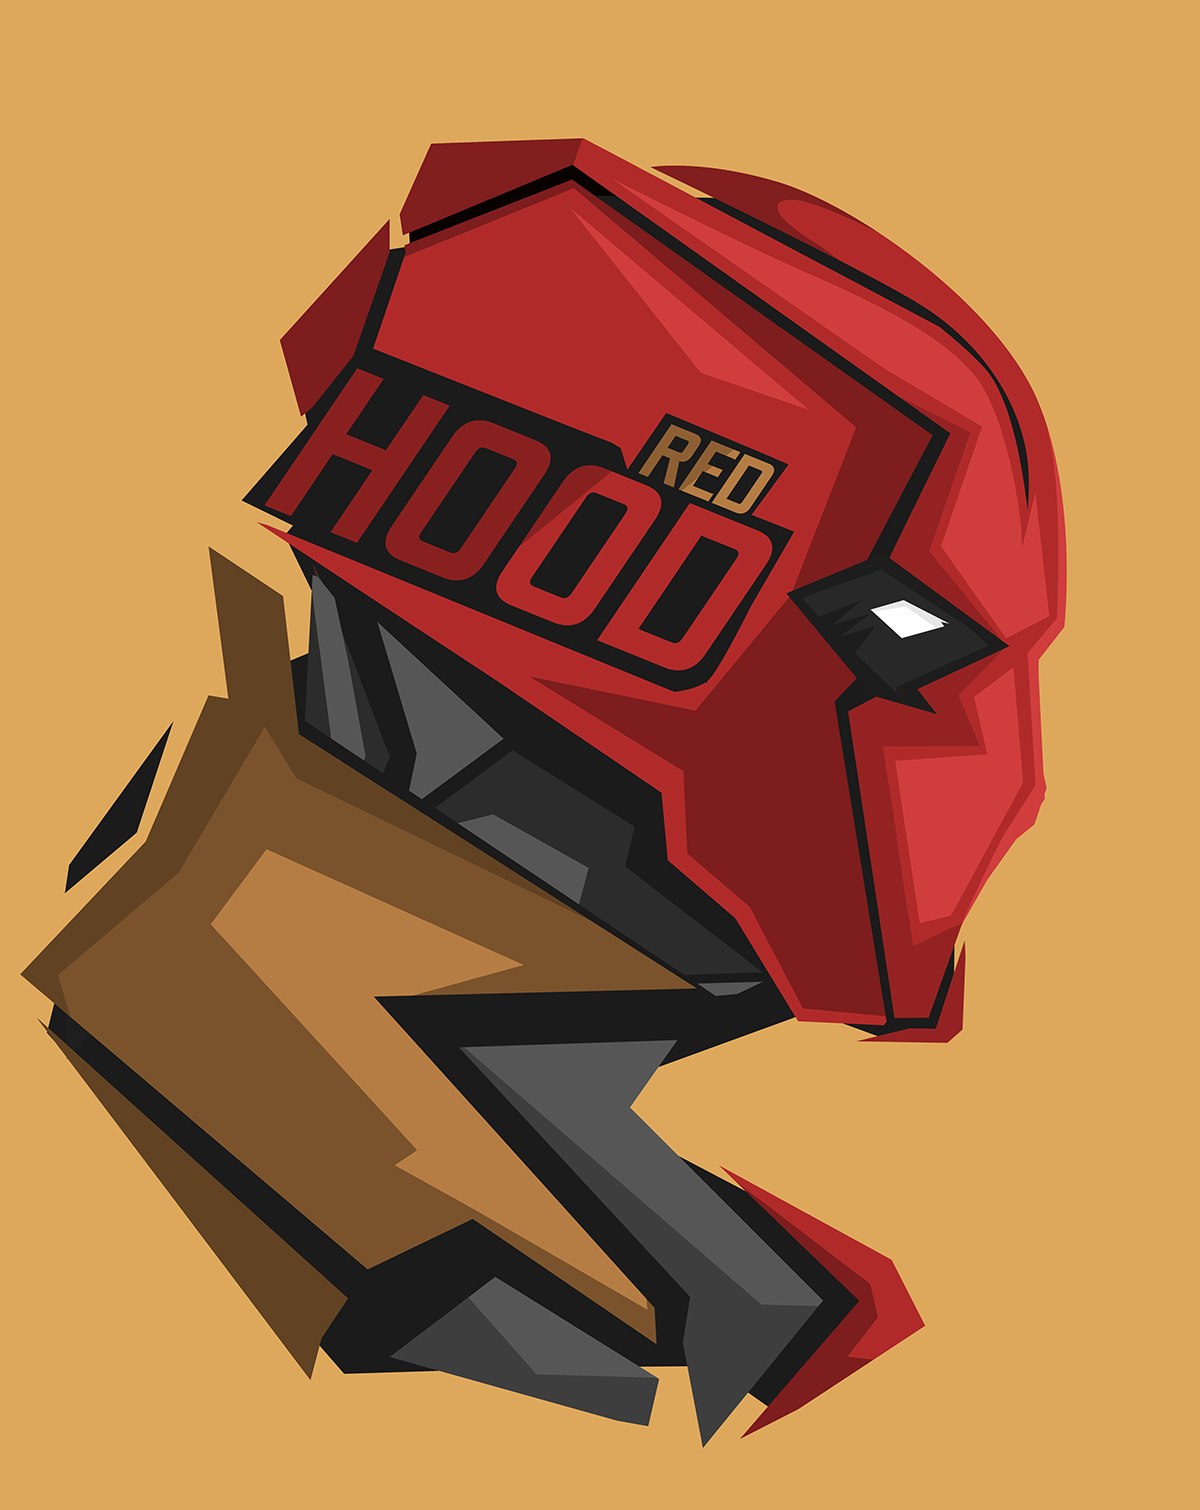 General 1200x1510 Red Hood yellow background Bosslogic profile DC Comics